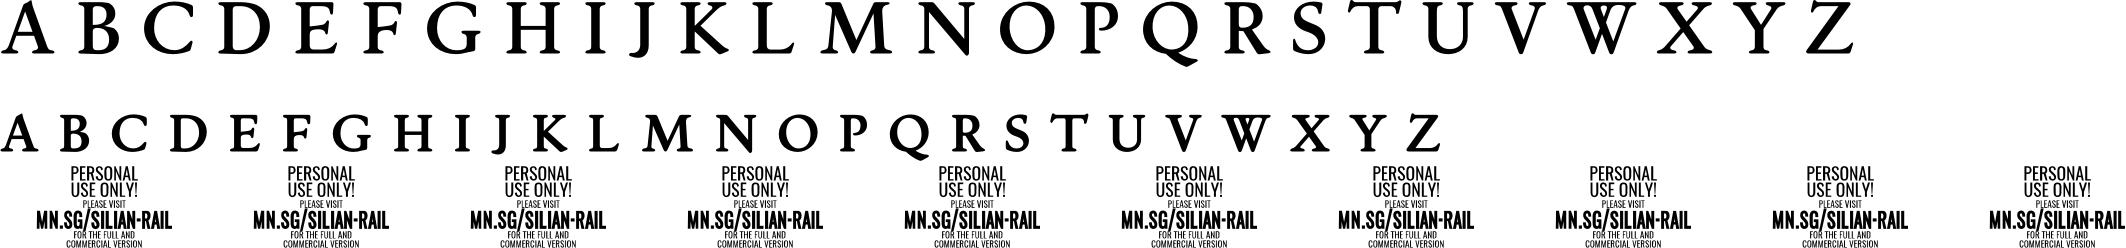 Silian Rail Font Character Map